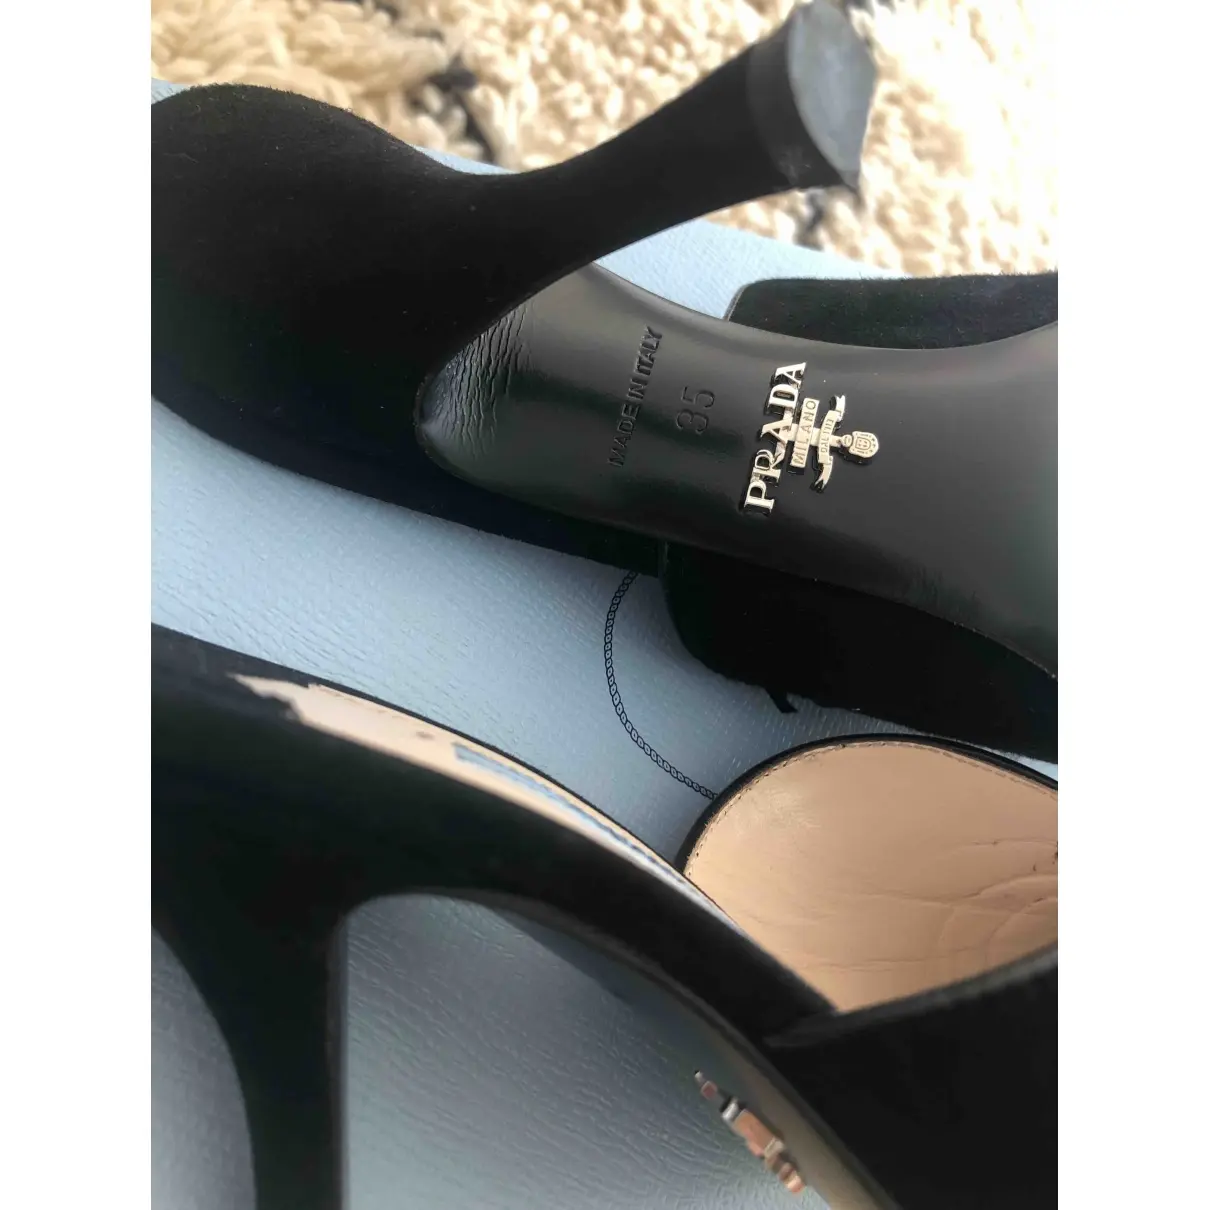 Buy Prada Black Suede Sandals online